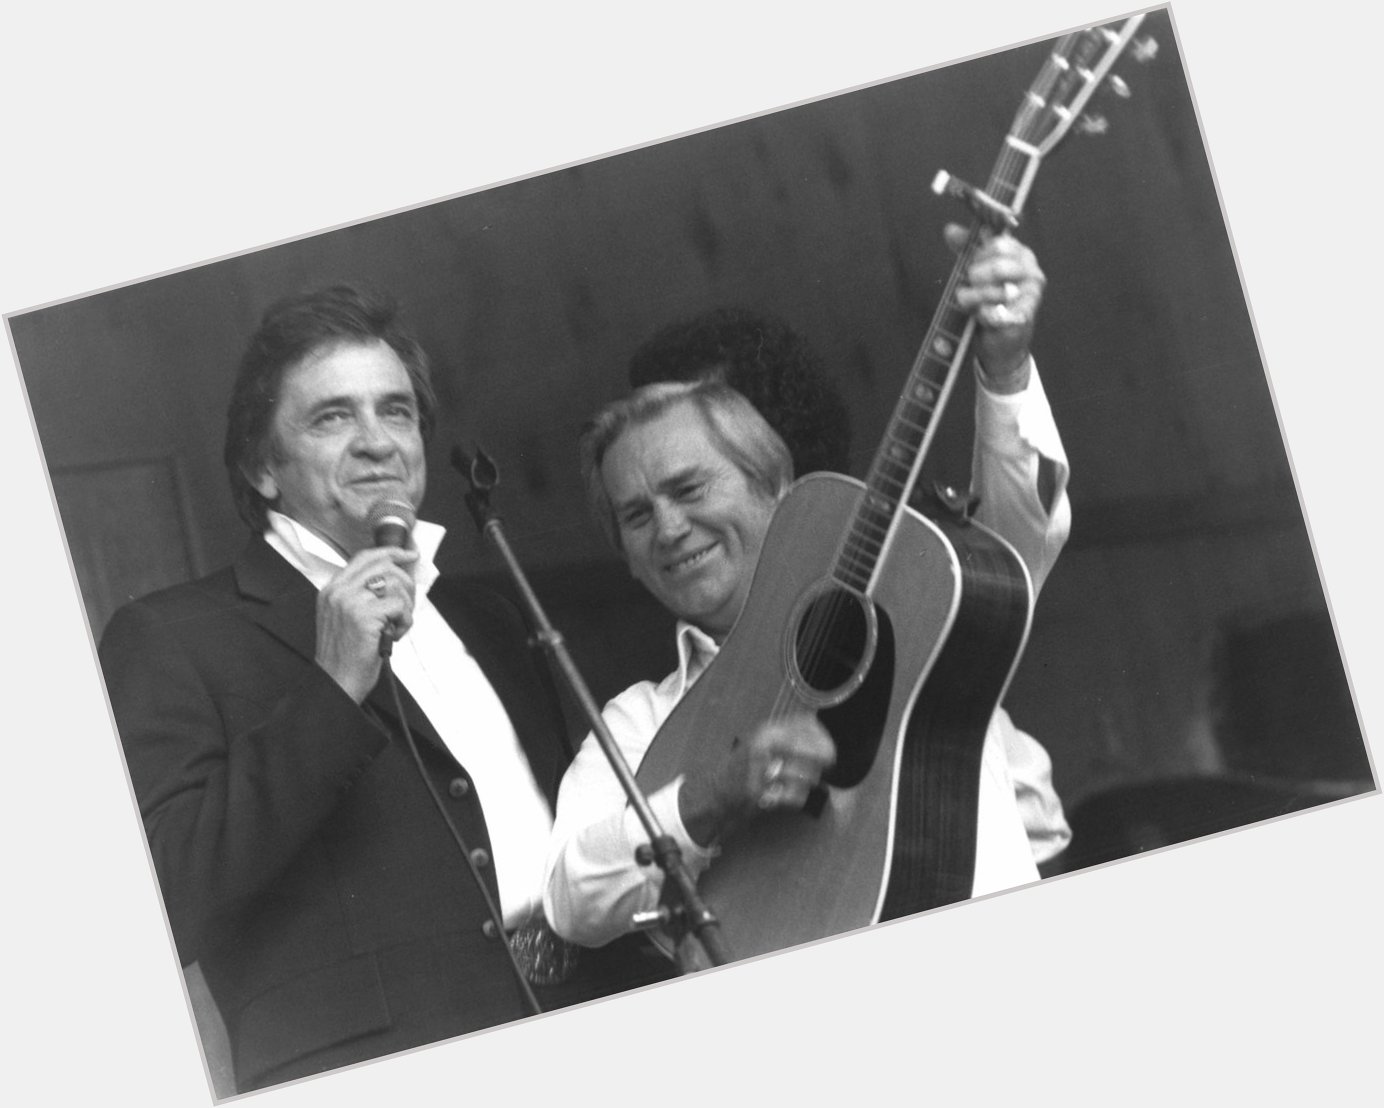 Happy birthday to the man in black, Mr. Johnny Cash! 